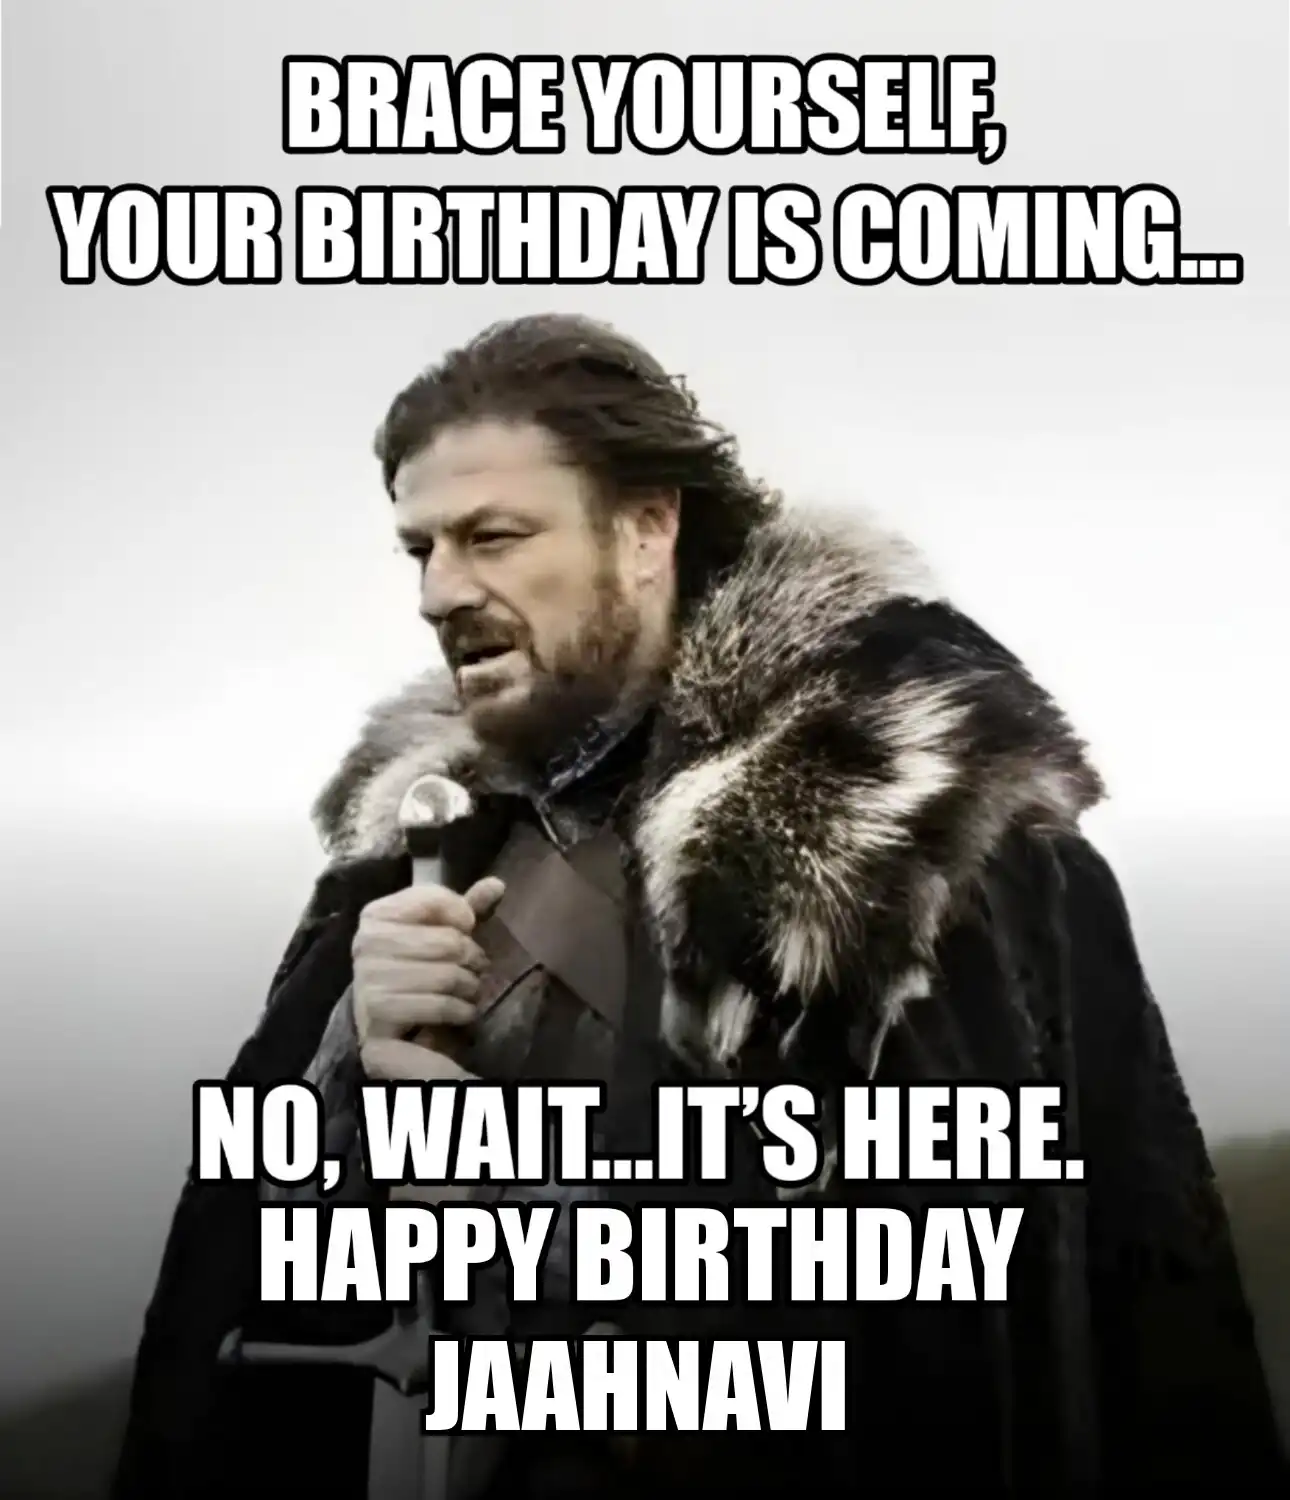 Happy Birthday Jaahnavi Brace Yourself Your Birthday Is Coming Meme